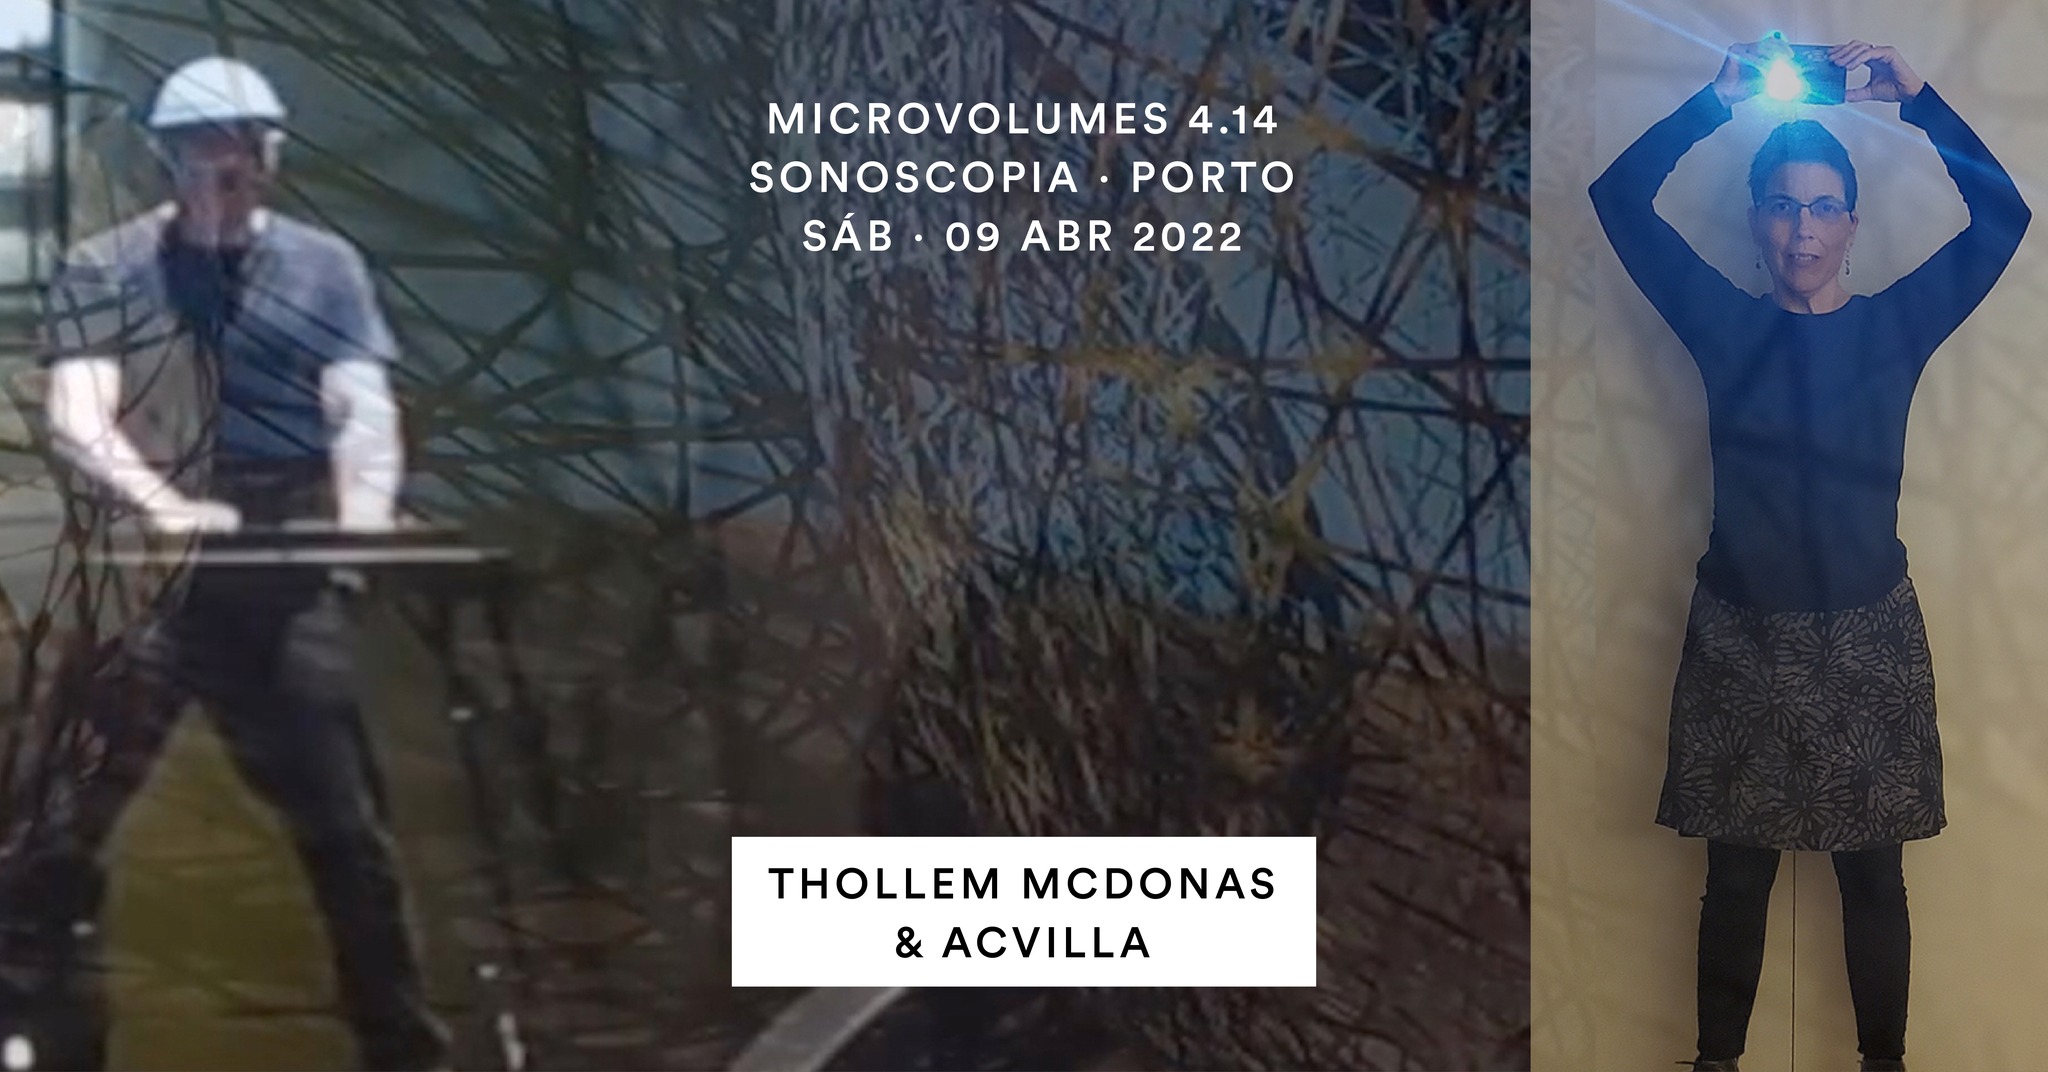 Microvolumes 4.14 | Thollem McDonas & ACVilla - Sonoscopia Associacão